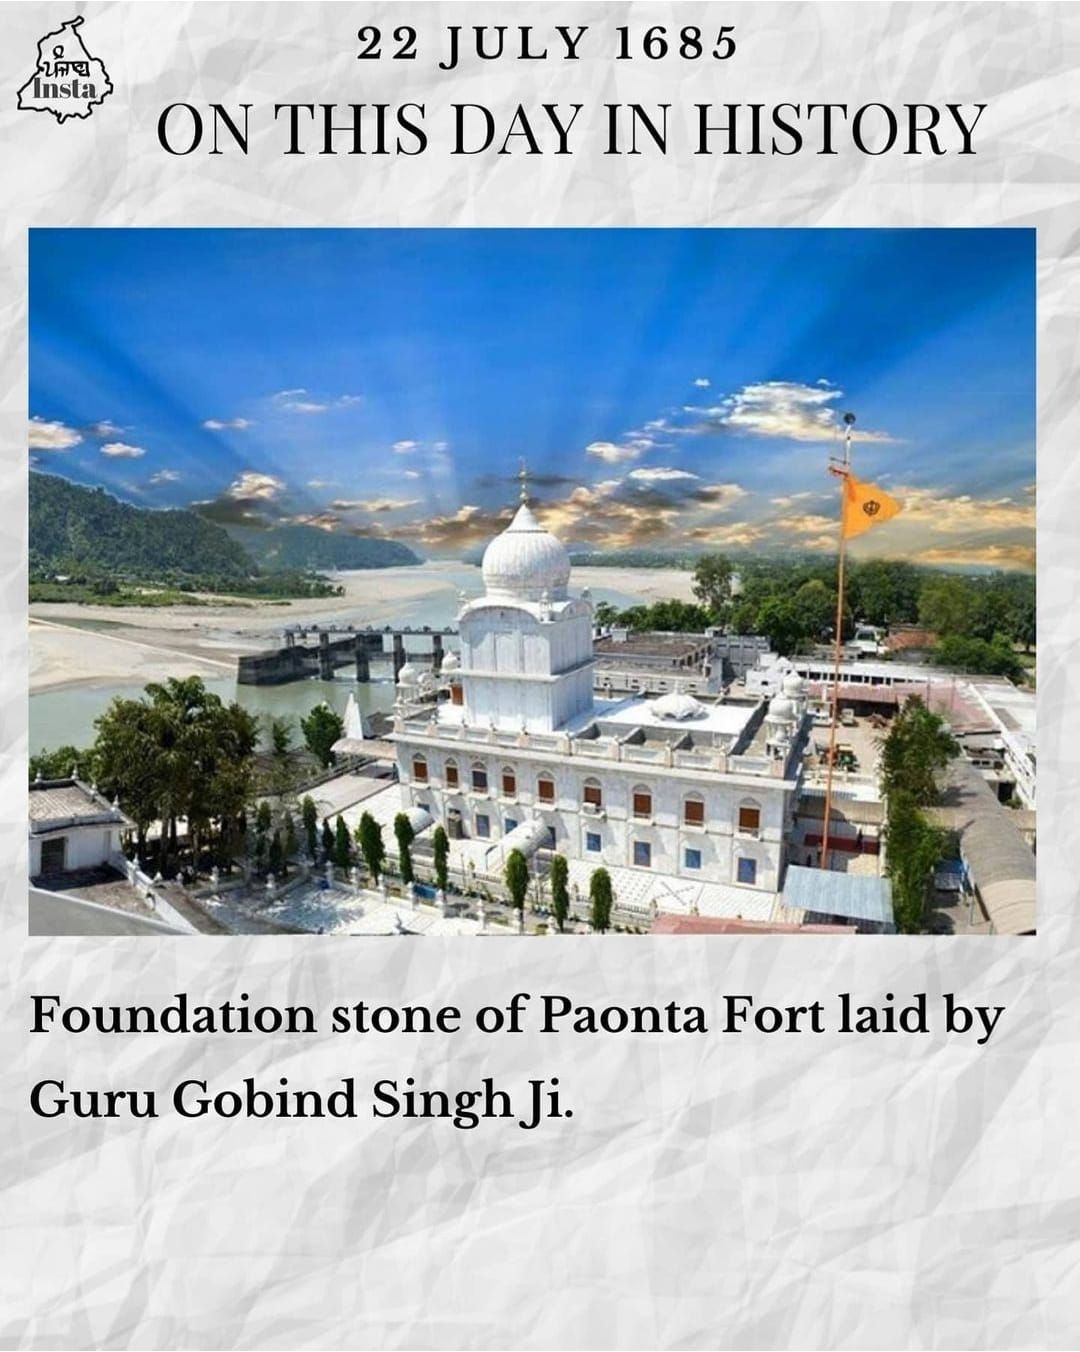 July 22. 1685: The foundation stone of Paonta Fort was laid by Guru Gobind Singh Ji.